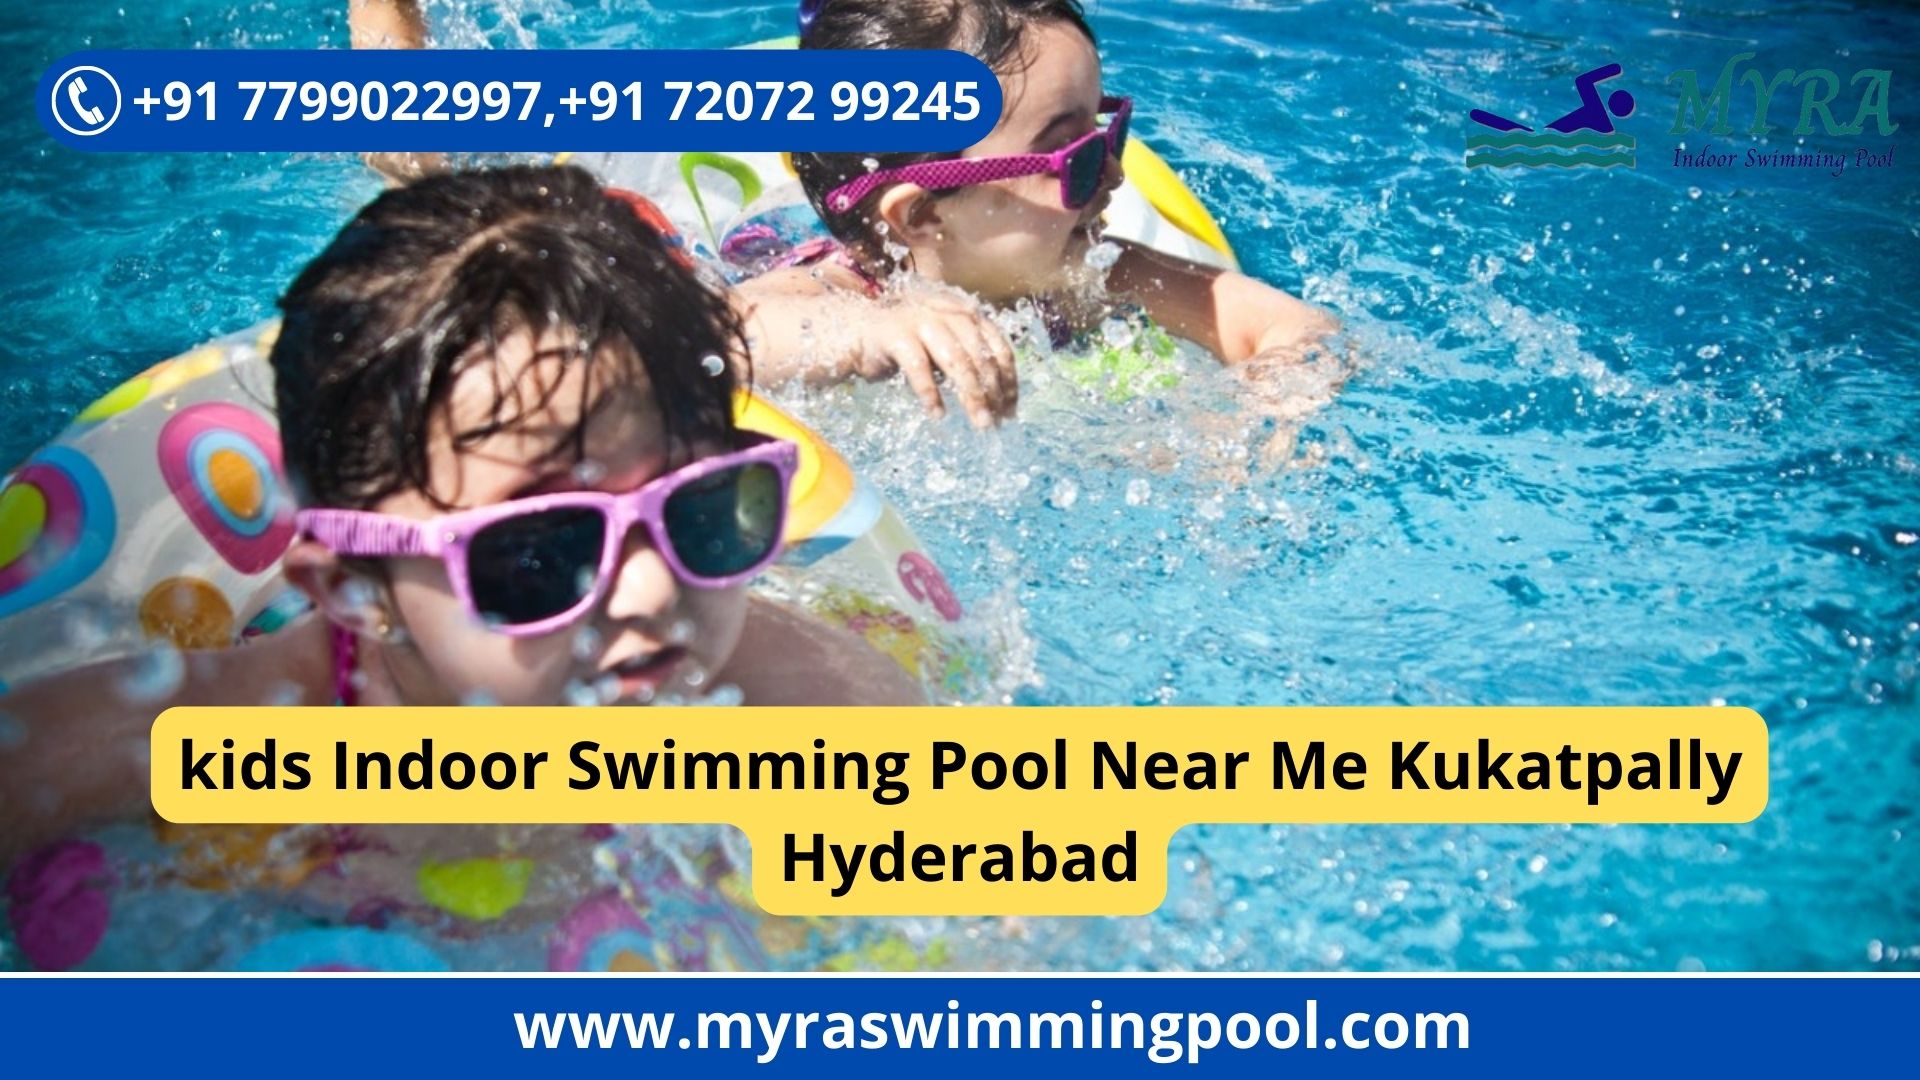 kids Indoor Swimming Pool Near Me Kukatpally